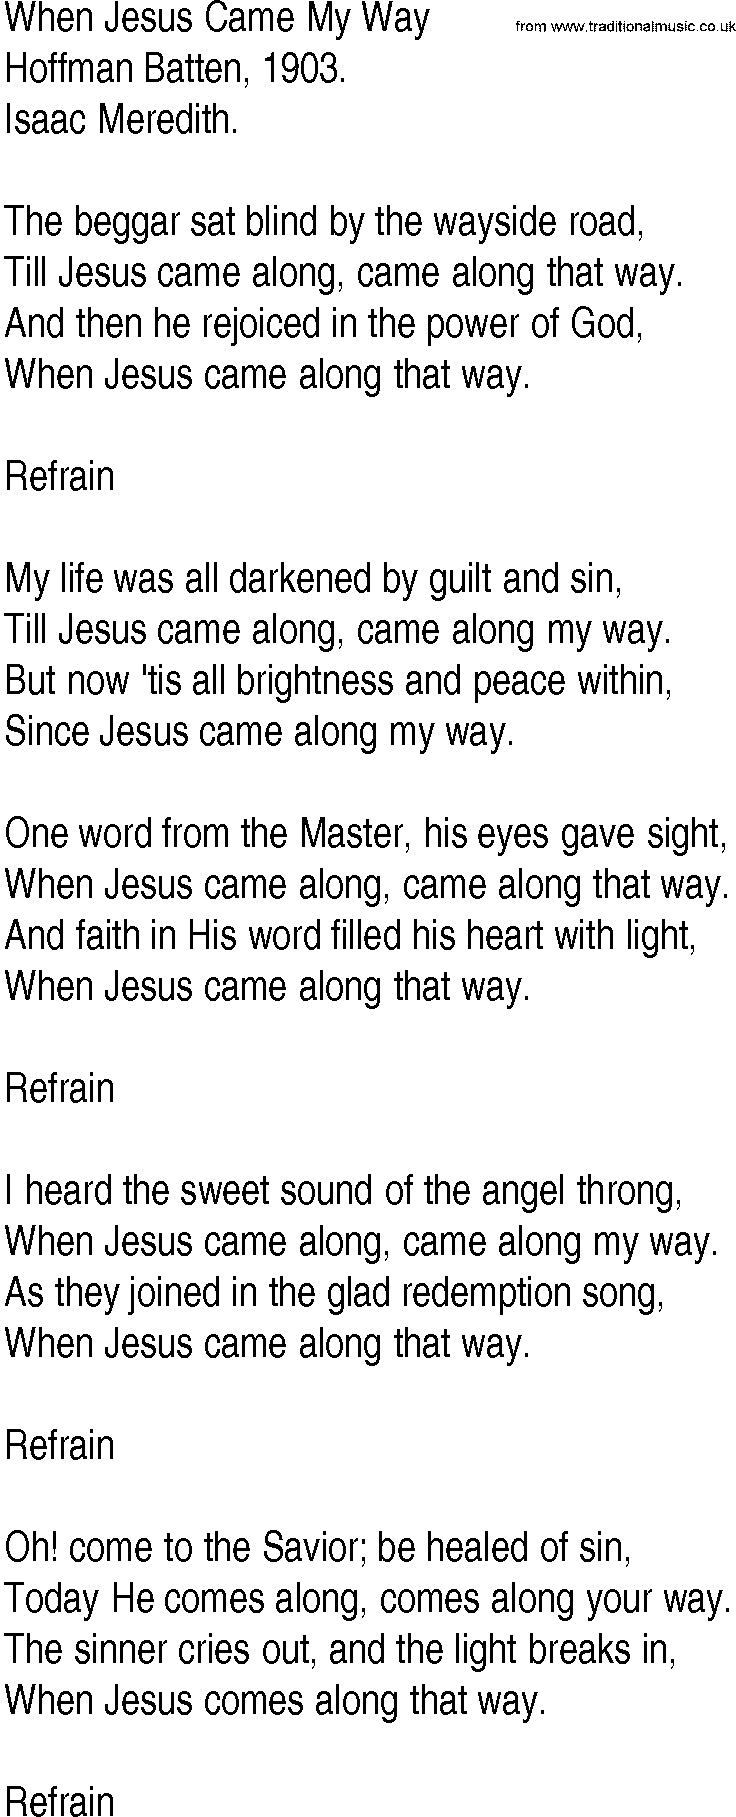 Hymn and Gospel Song: When Jesus Came My Way by Hoffman Batten lyrics